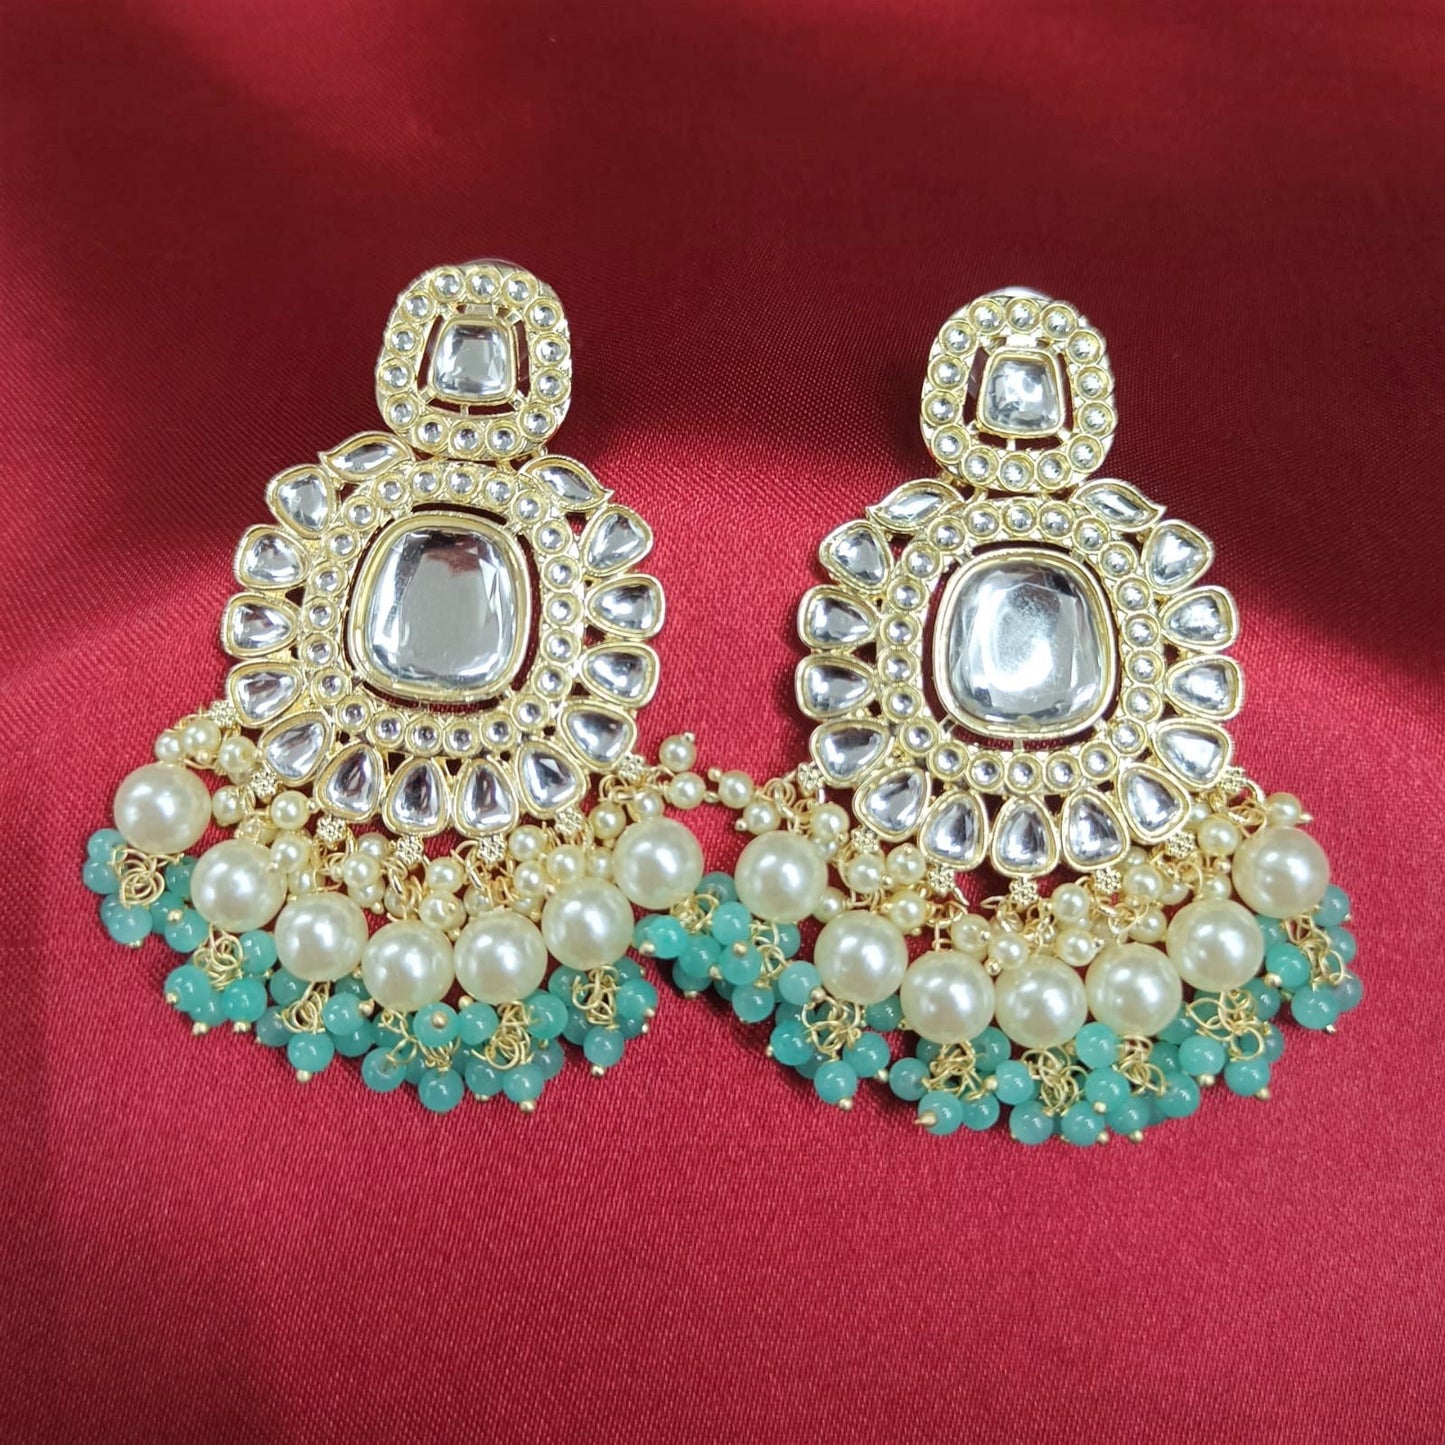 Bdiva 18K Gold Plated Turquoise Kundan Dangler Earrings with Semi Cultured Pearls.